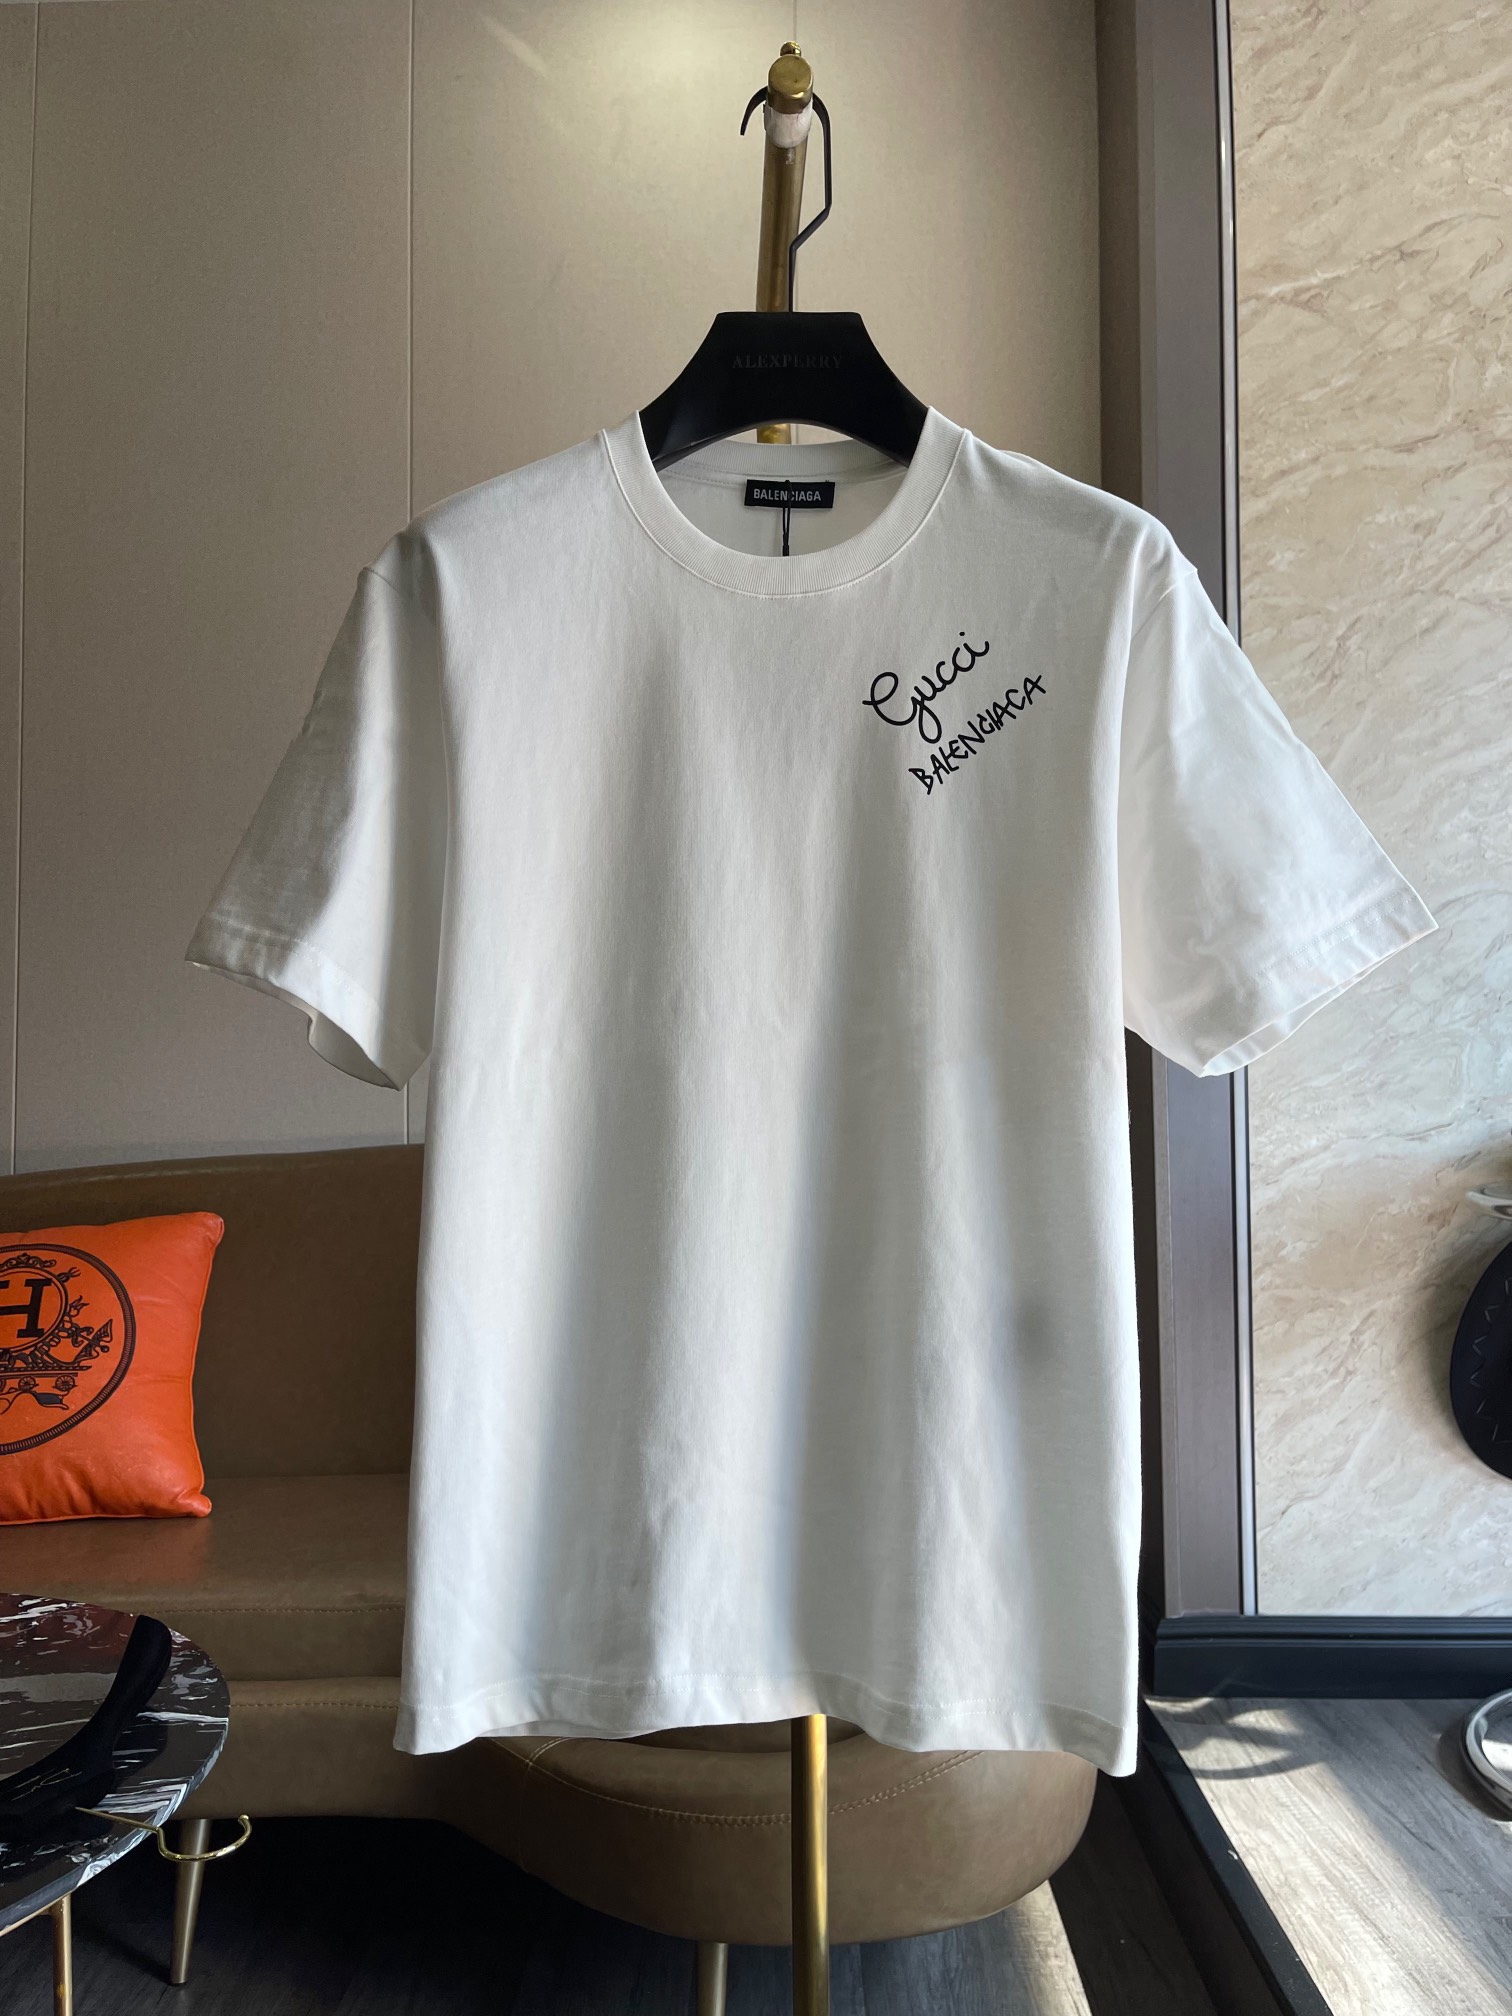 Online
 Balenciaga Clothing T-Shirt Black Doodle White Printing Cotton Spring/Summer Collection Fashion Short Sleeve